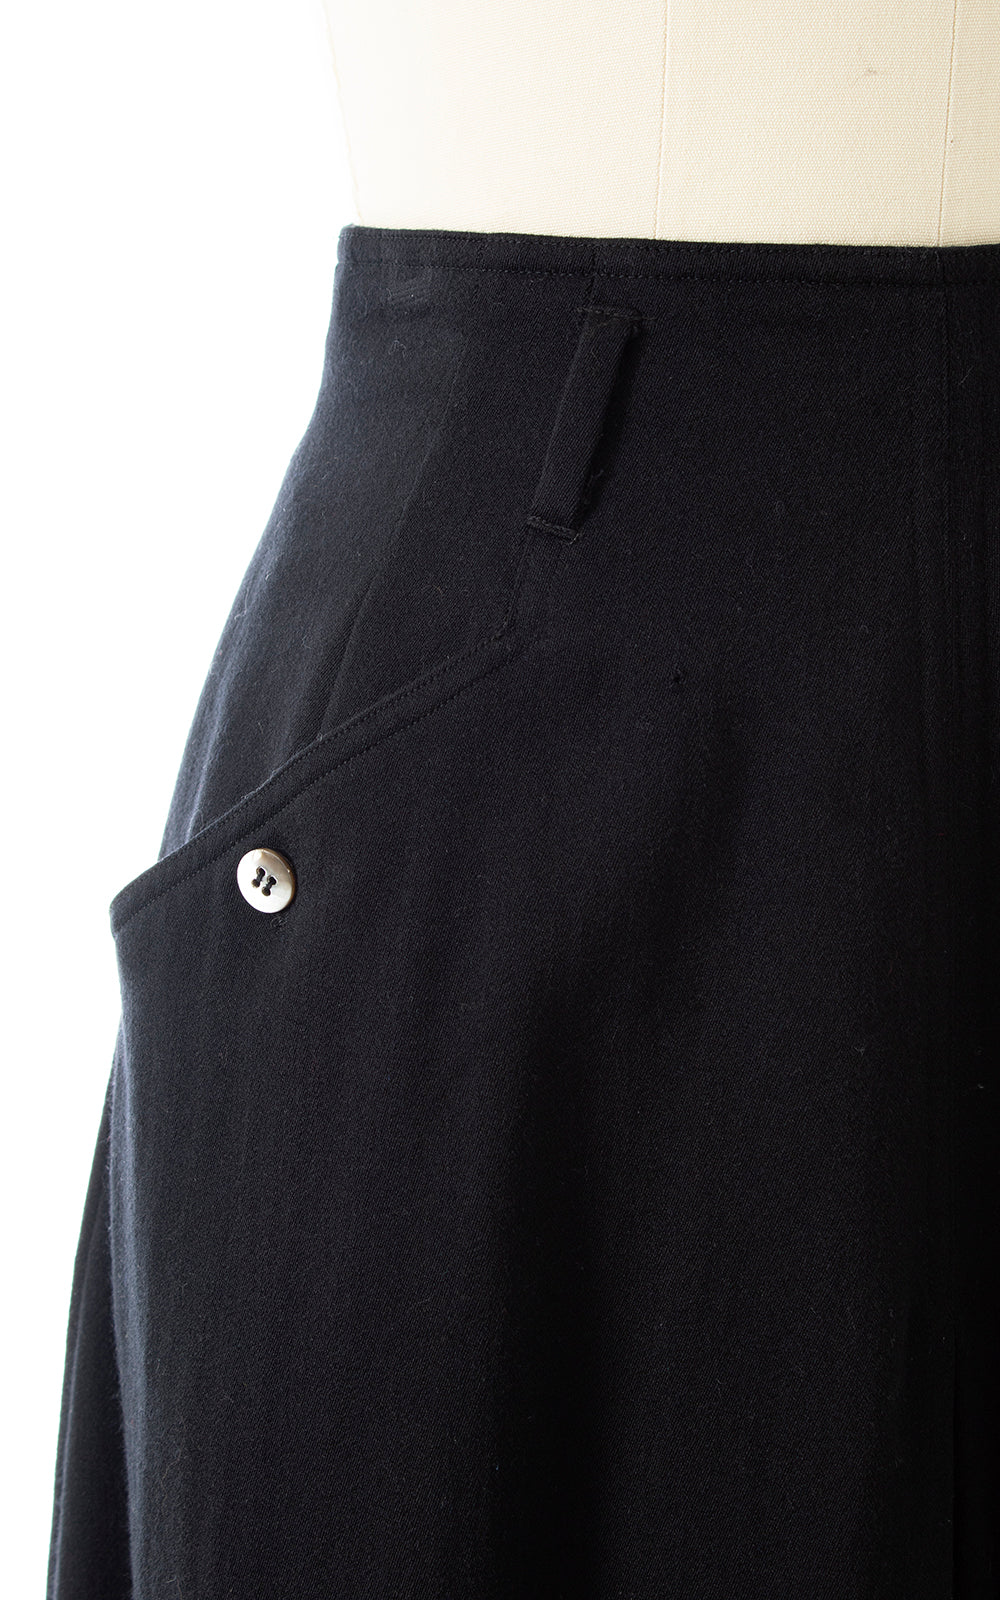 1980s LIZ CLAIBORNE Black Wool Skirt with Pockets | x-small